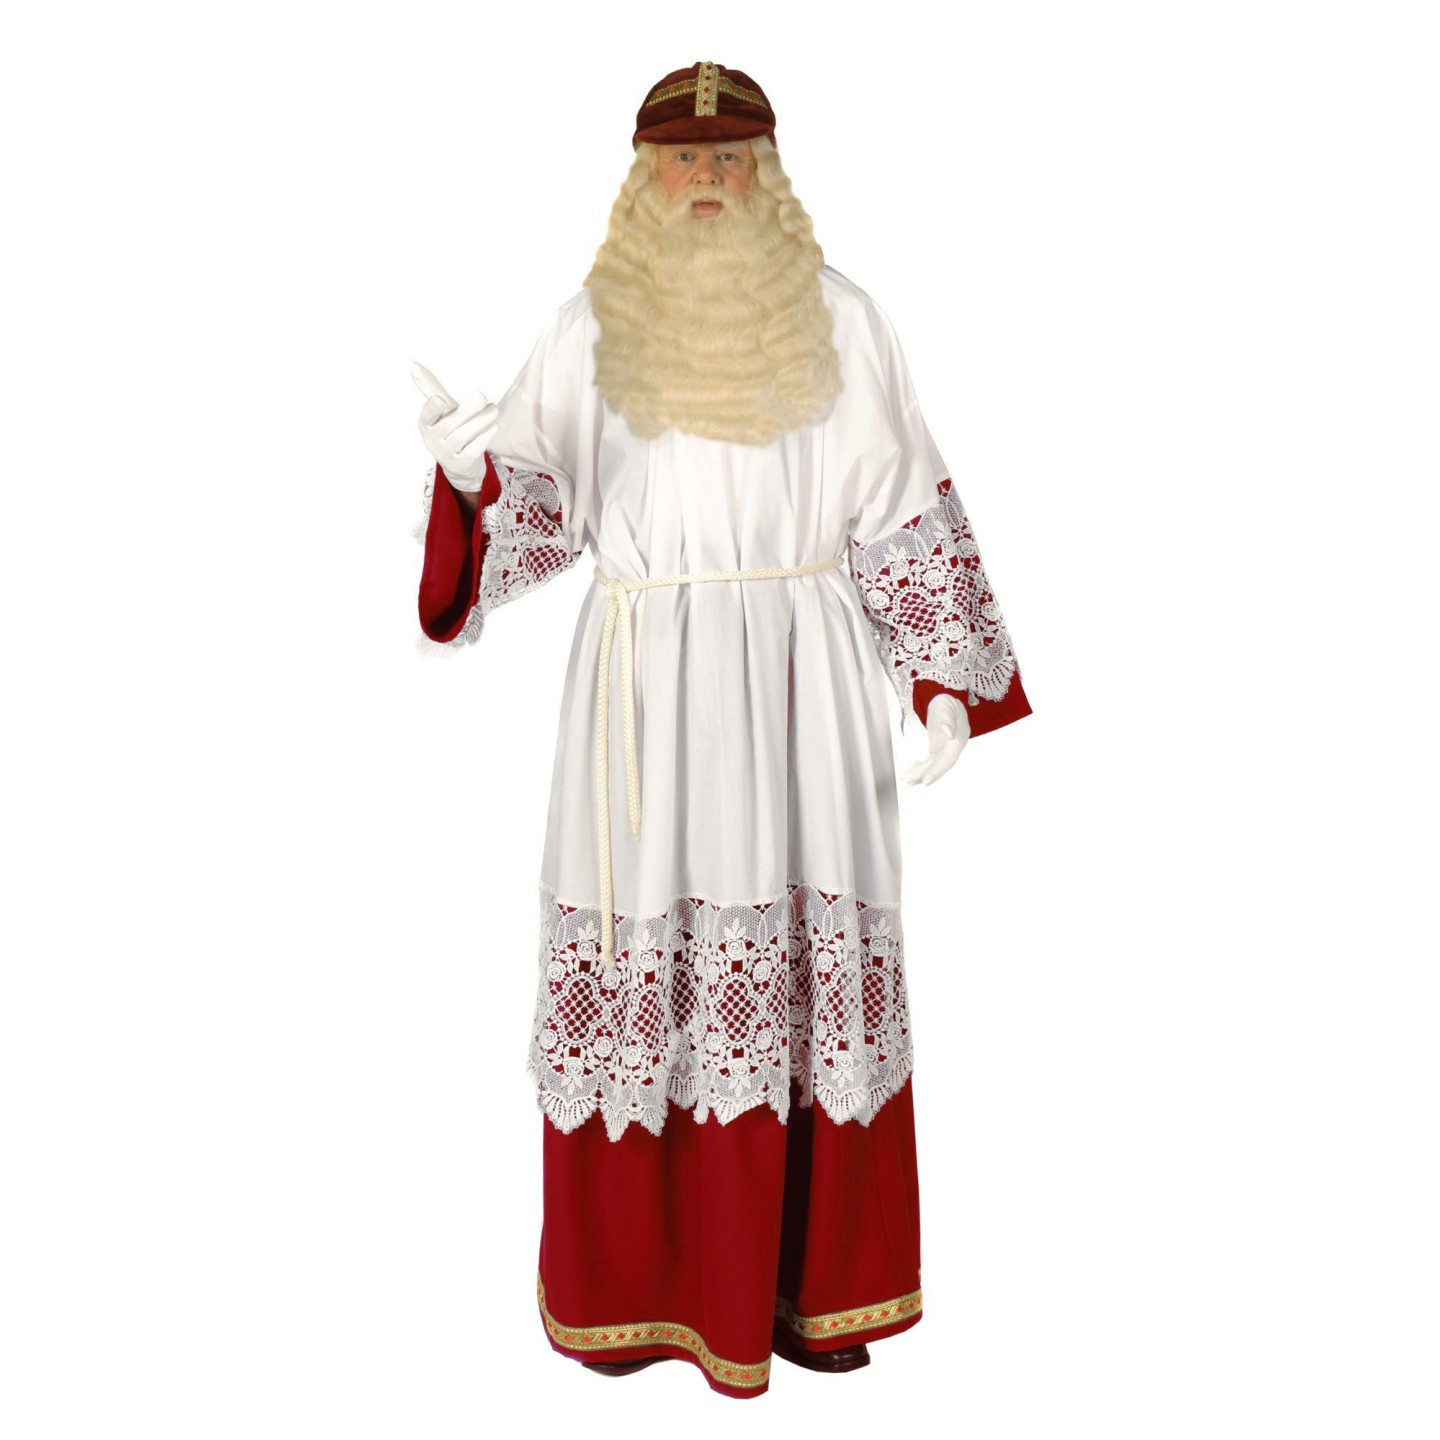 Beukende elektrode Huichelaar Sinterklaas kostuum Jan Decleir replica | Jokershop.be